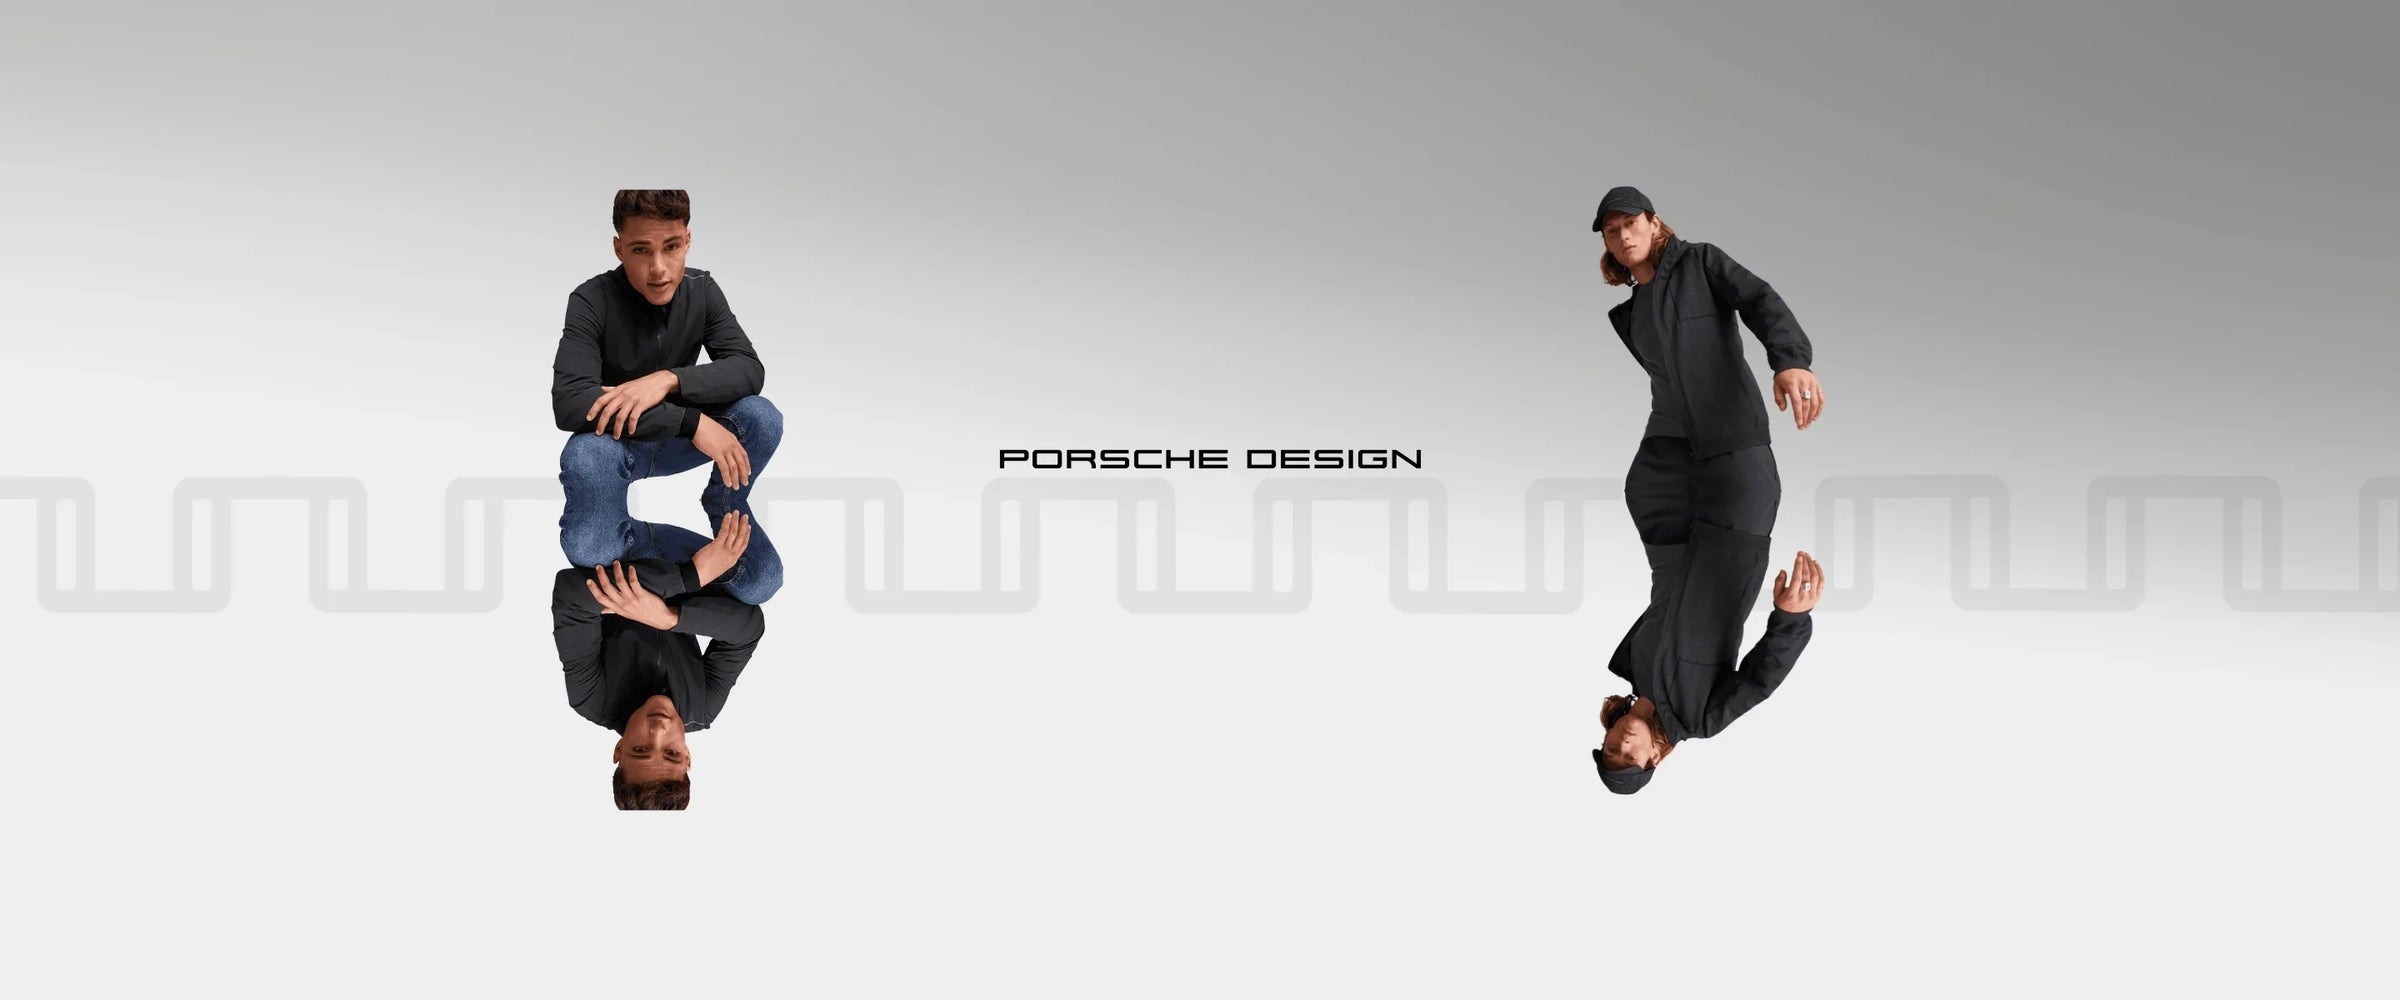 Porsche Design - F1 and Motorpsort Offficial Merchandise - Fueler store